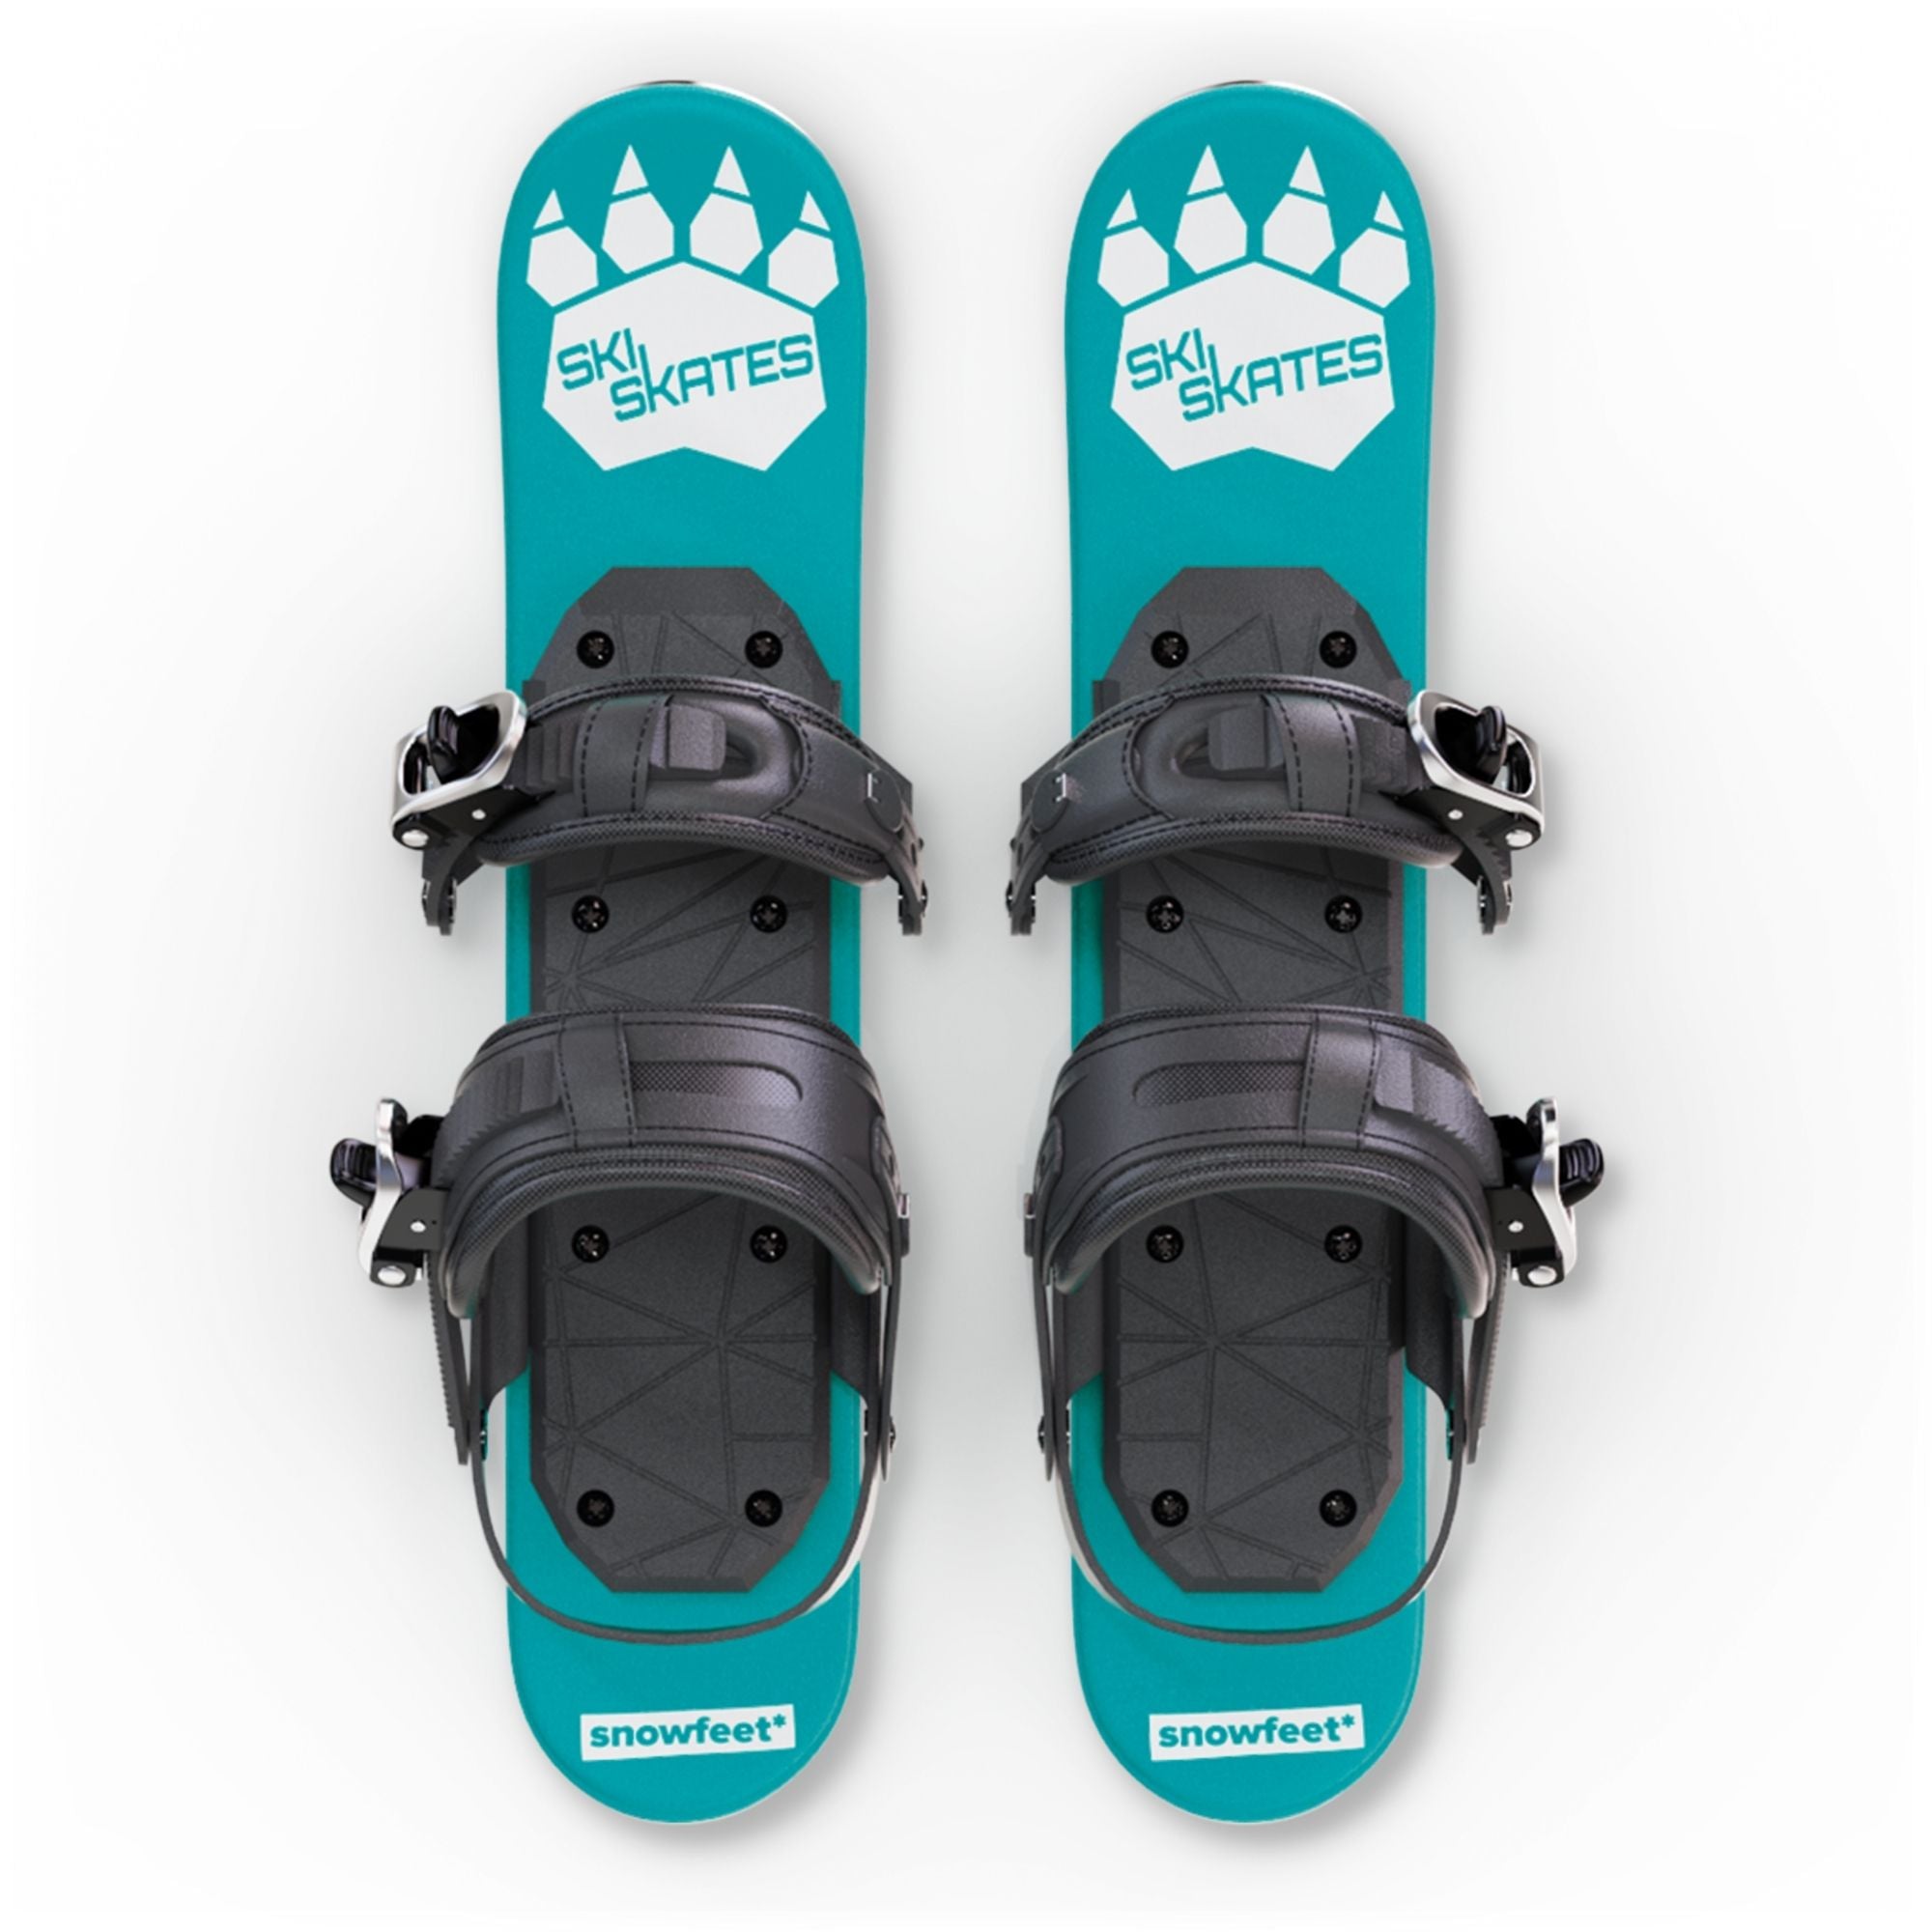 Skiskates - Mini Ski Skates | Snowboard Boots Model - Official Product